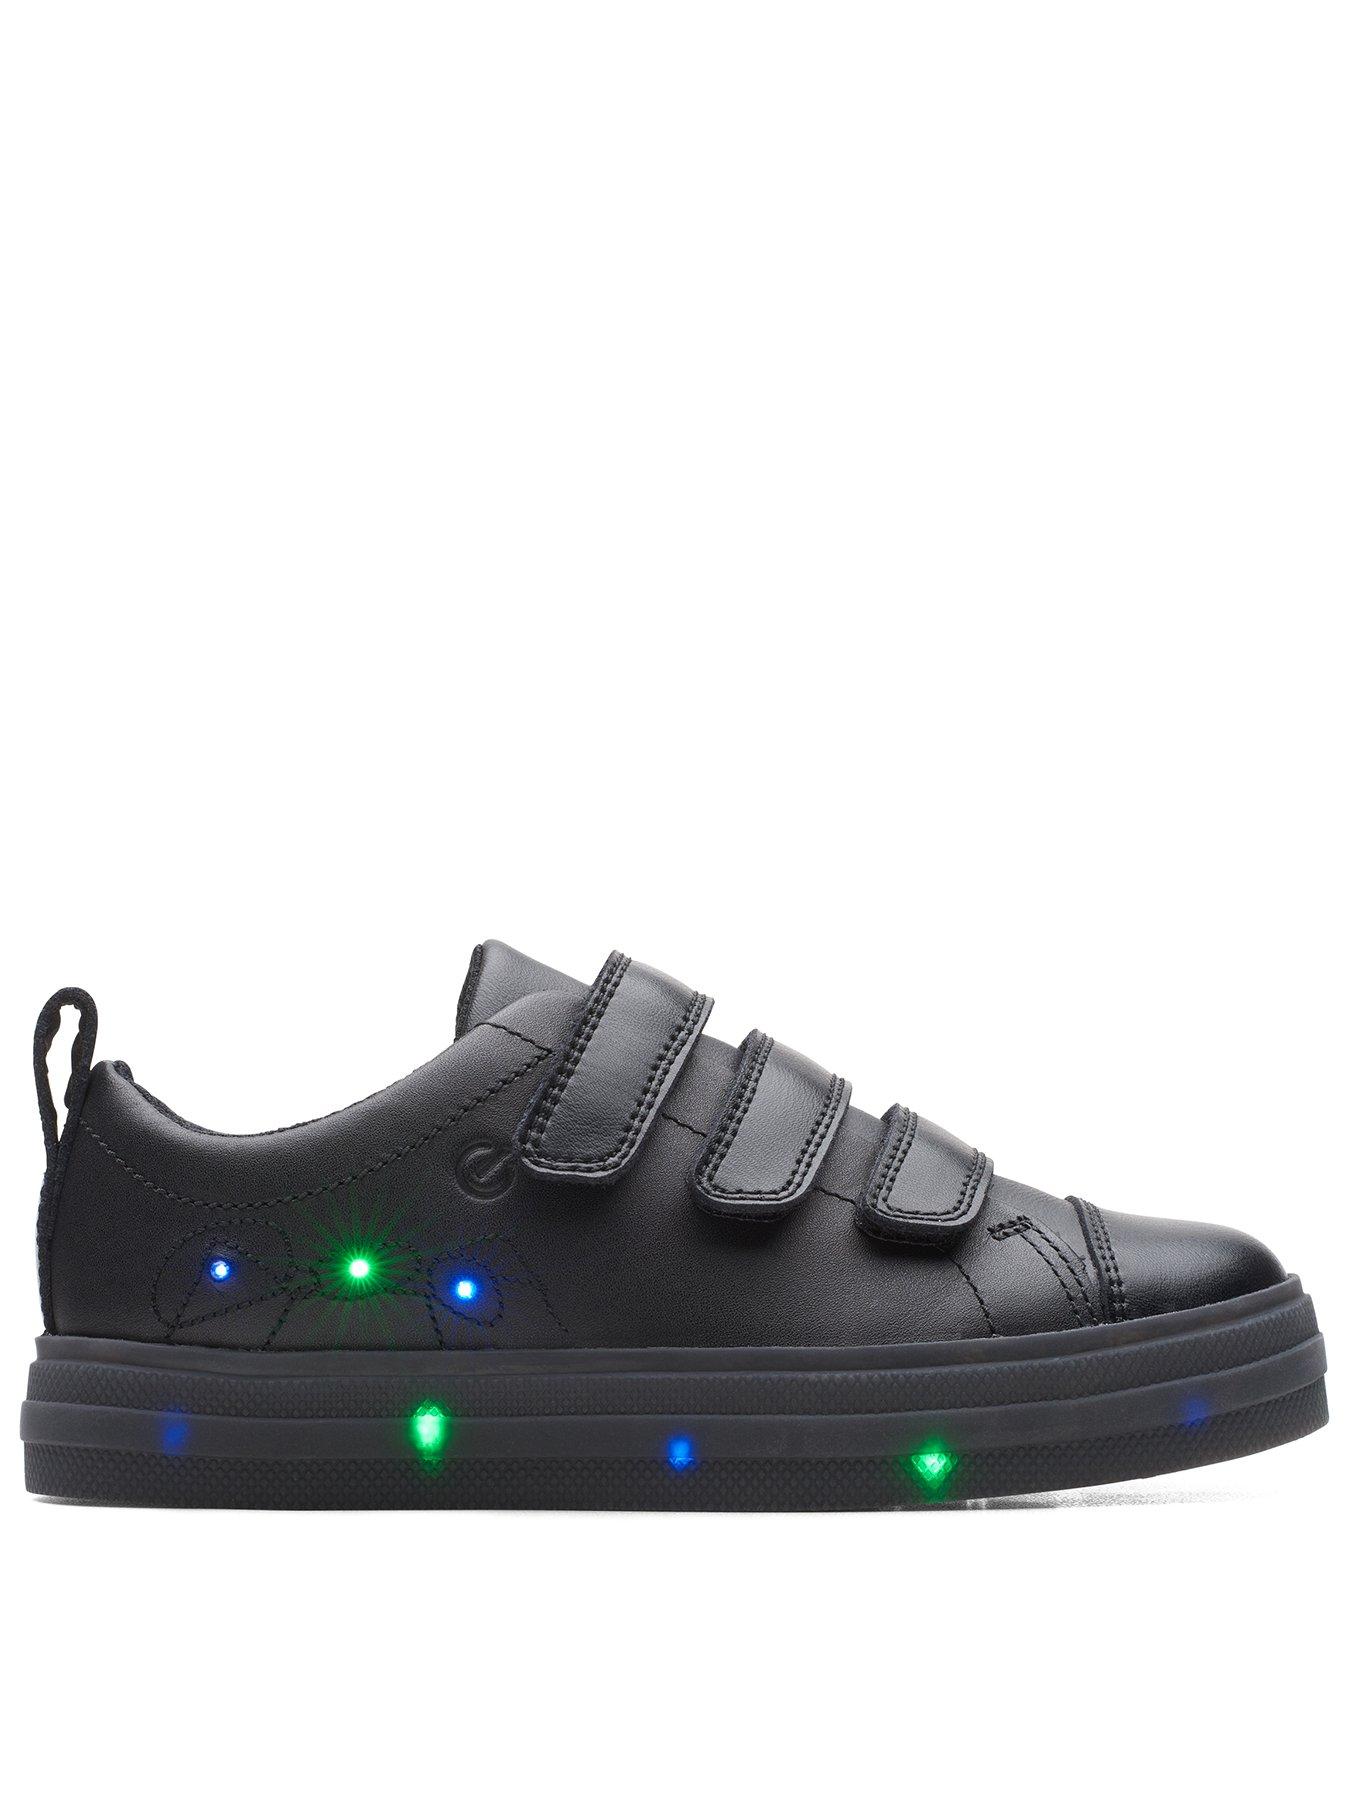 Kids Kids Flare Bright Light Up Strap School Shoes - Black